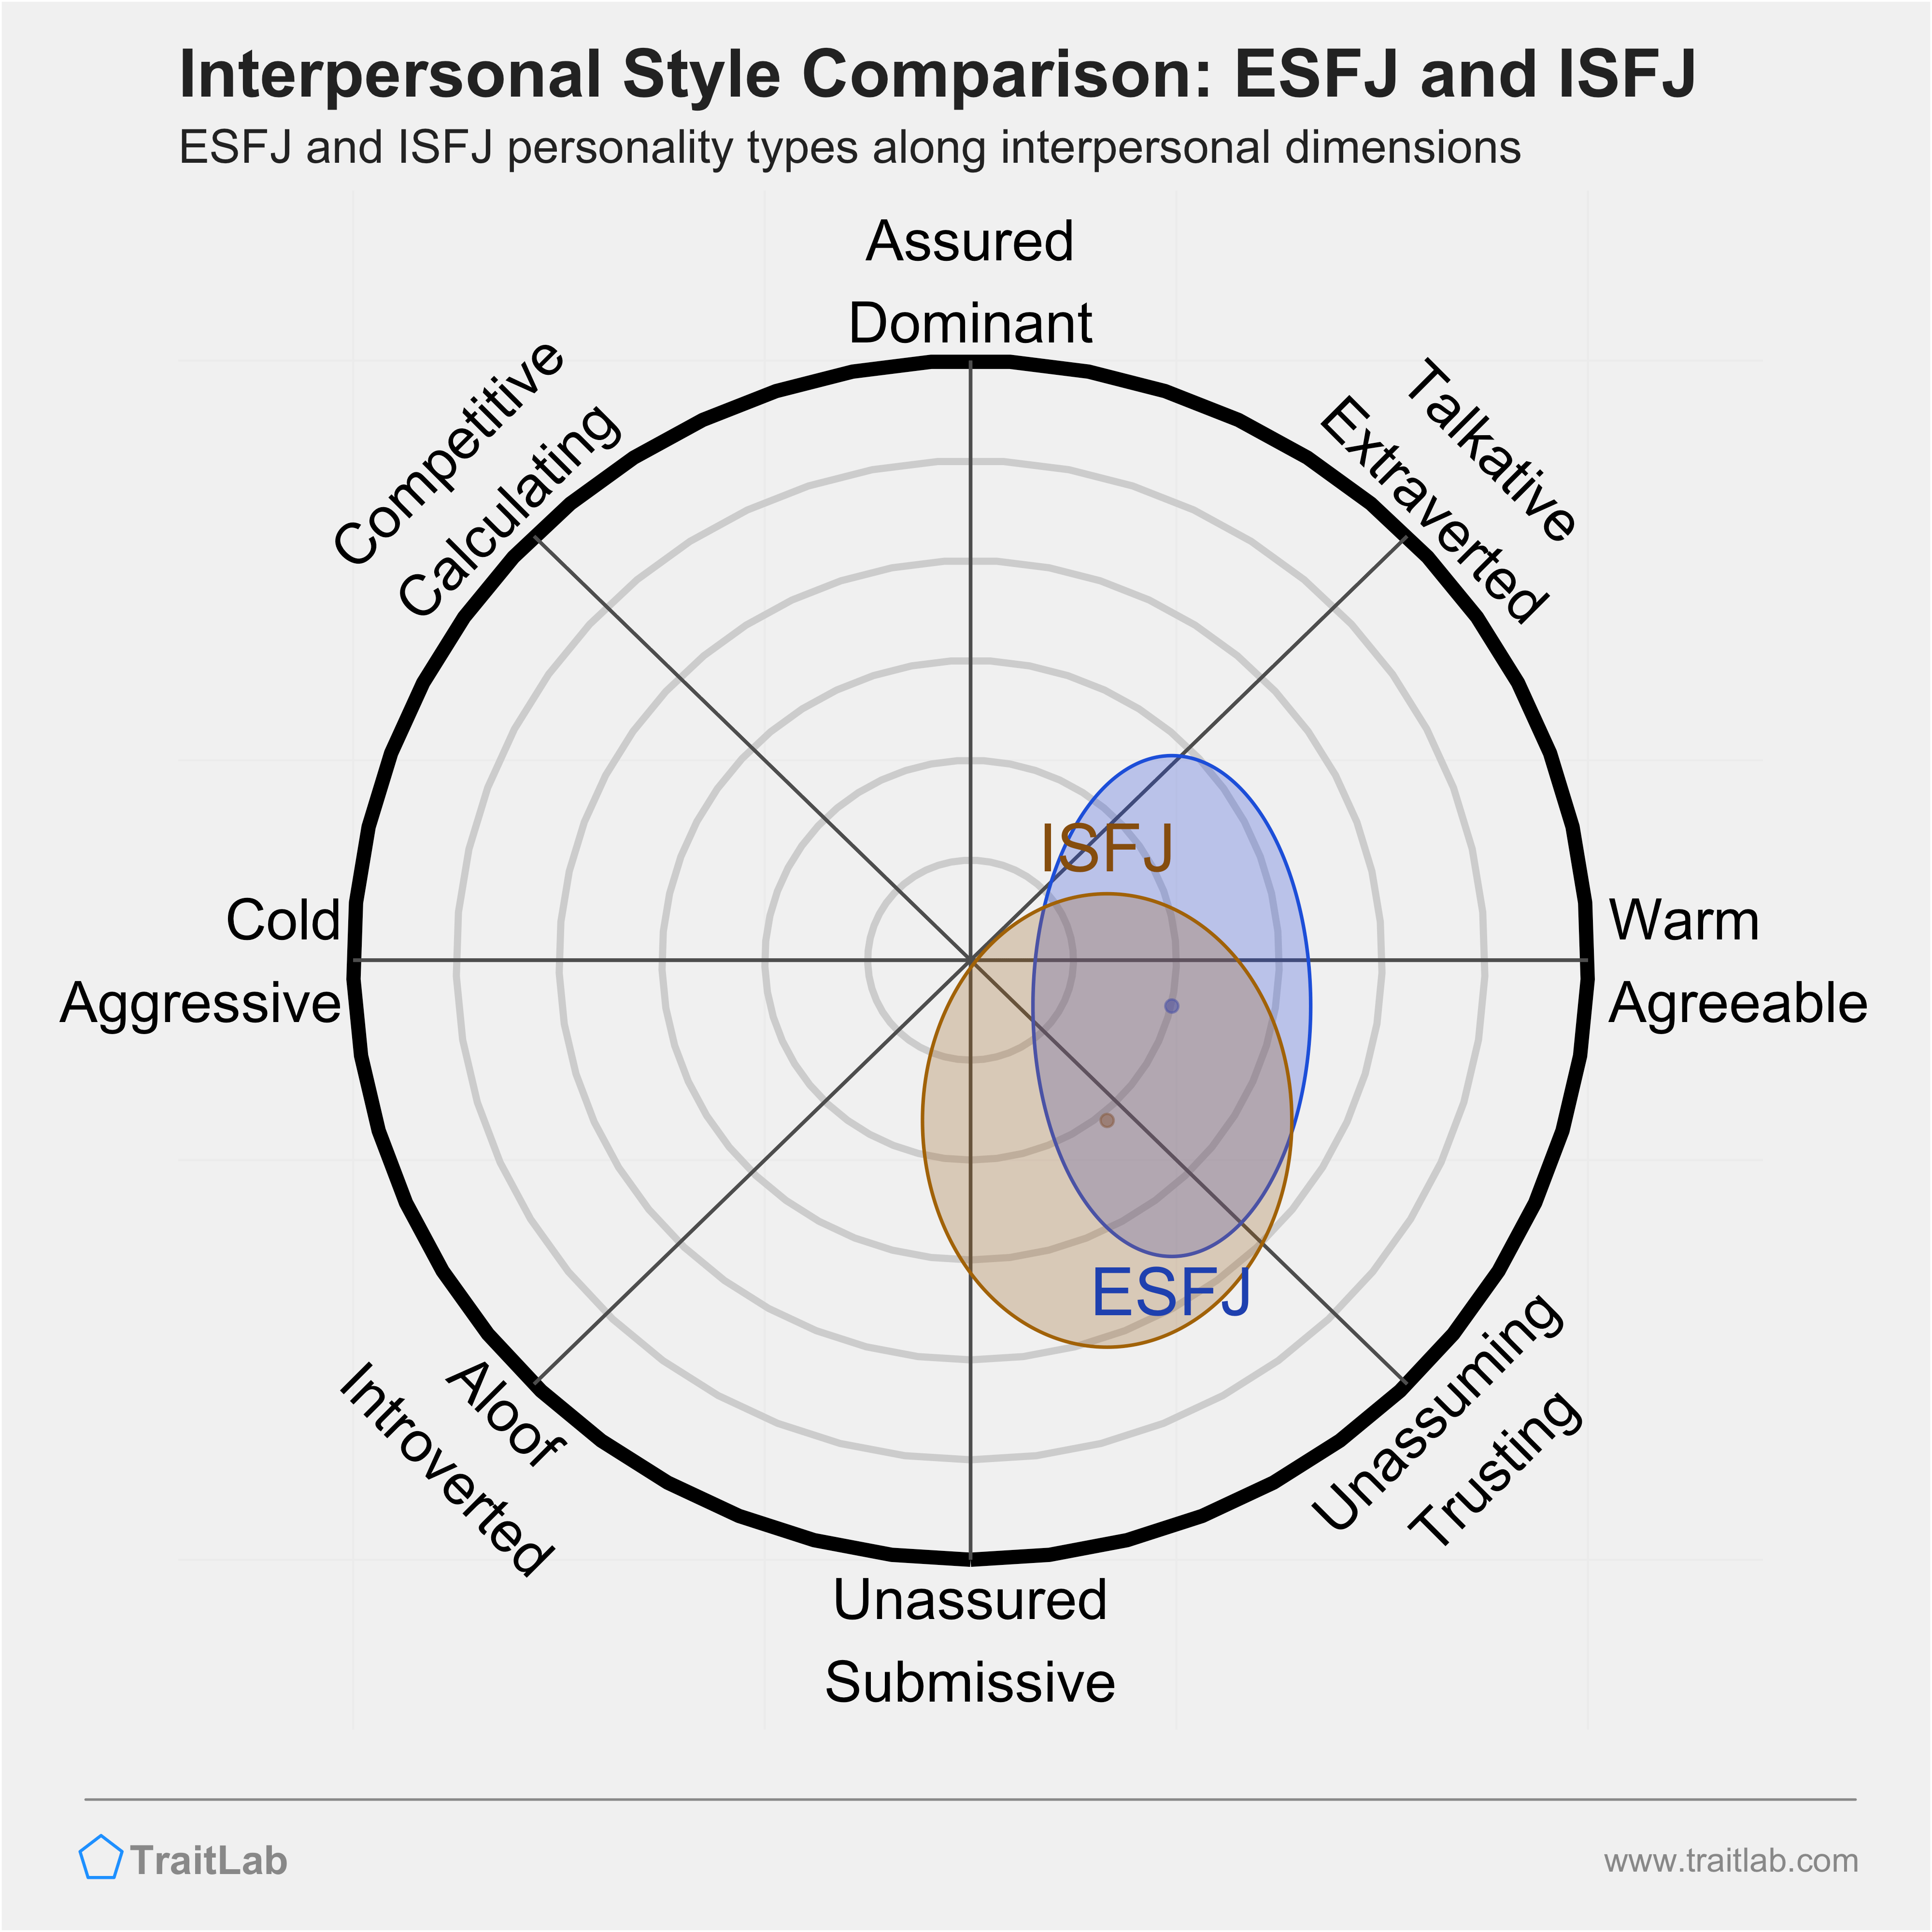 ESFJ and ISFJ comparison across interpersonal dimensions